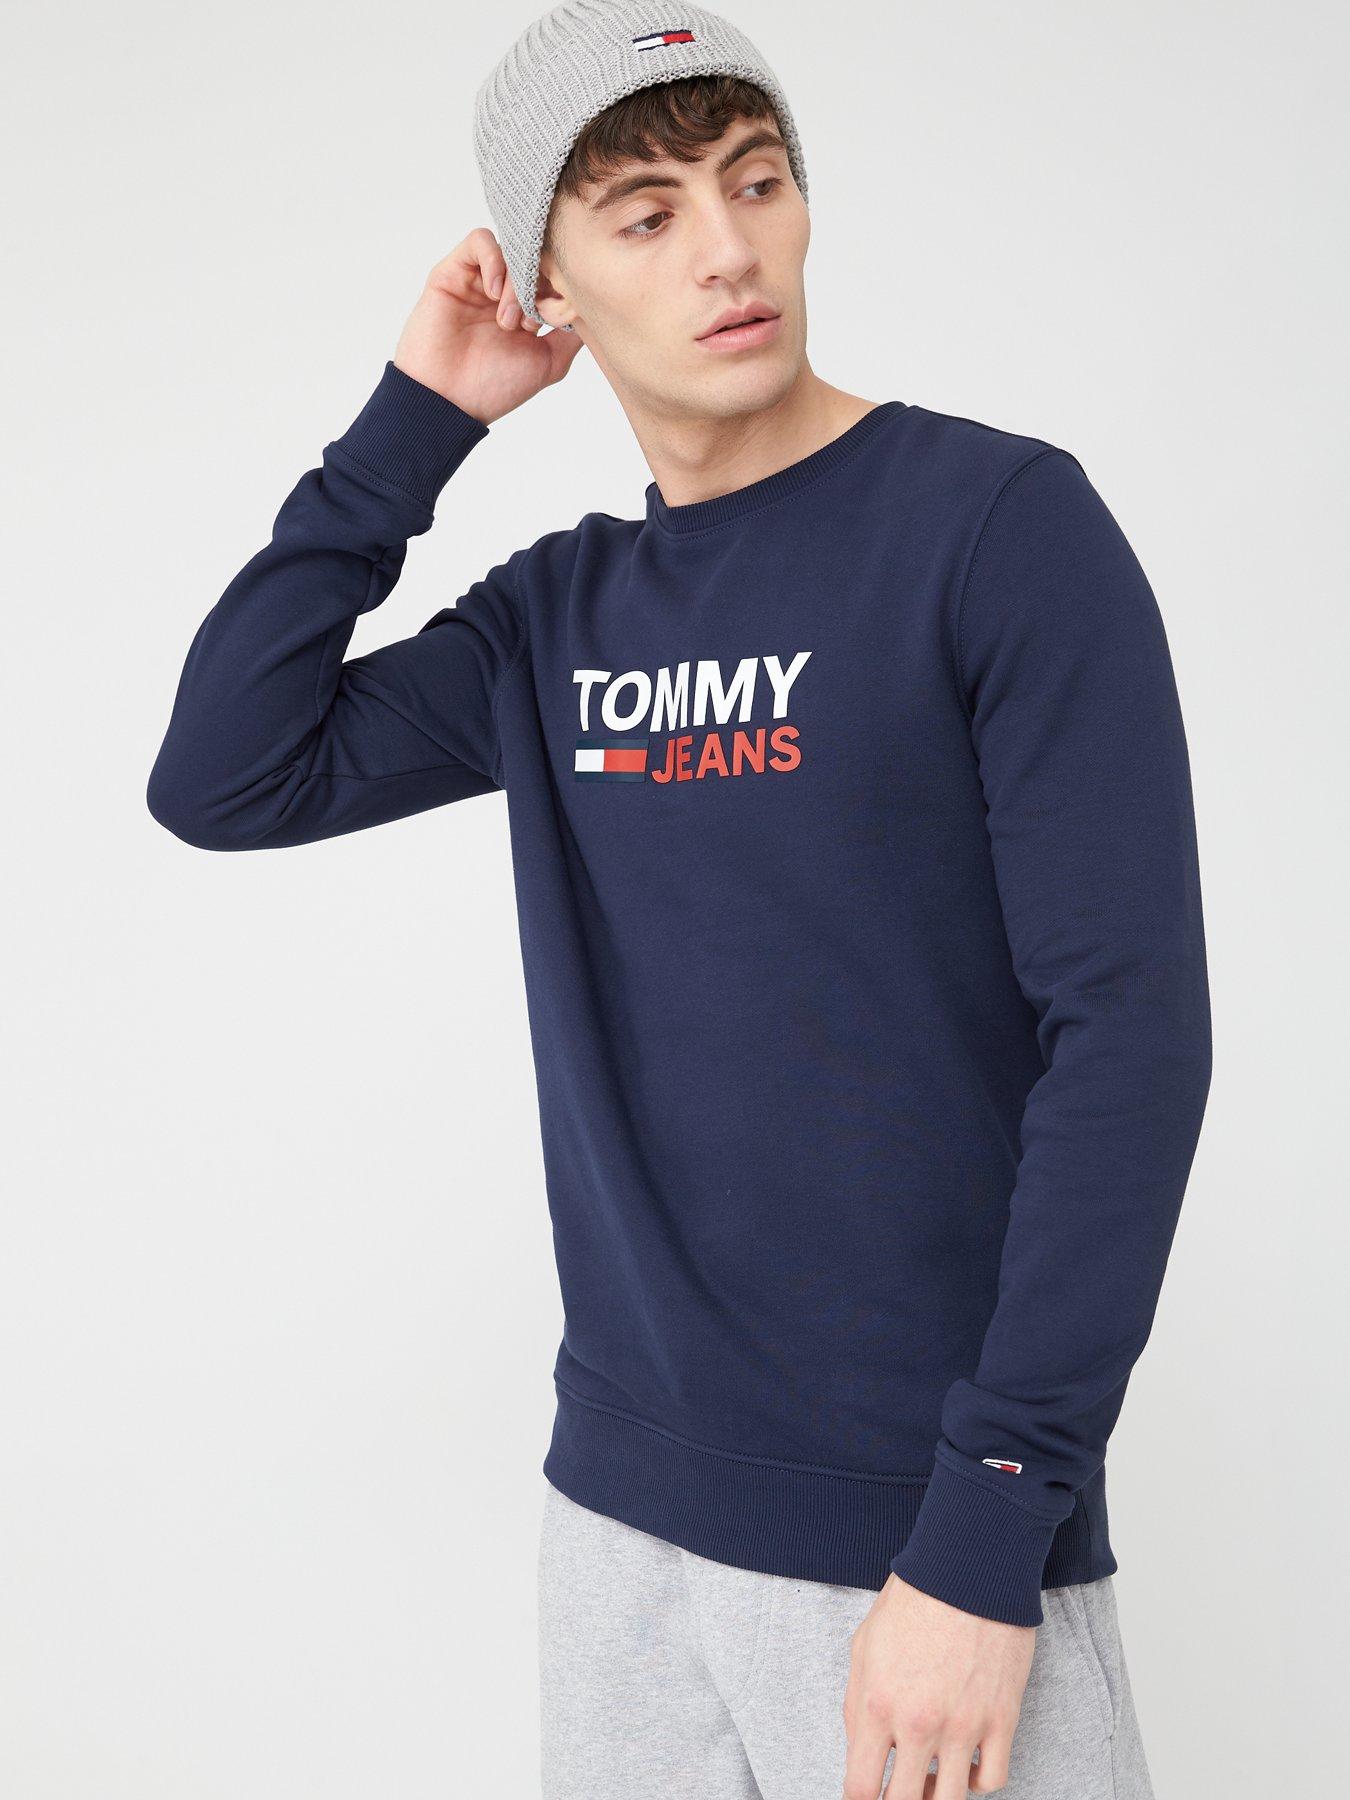 tommy jeans sweatshirt navy